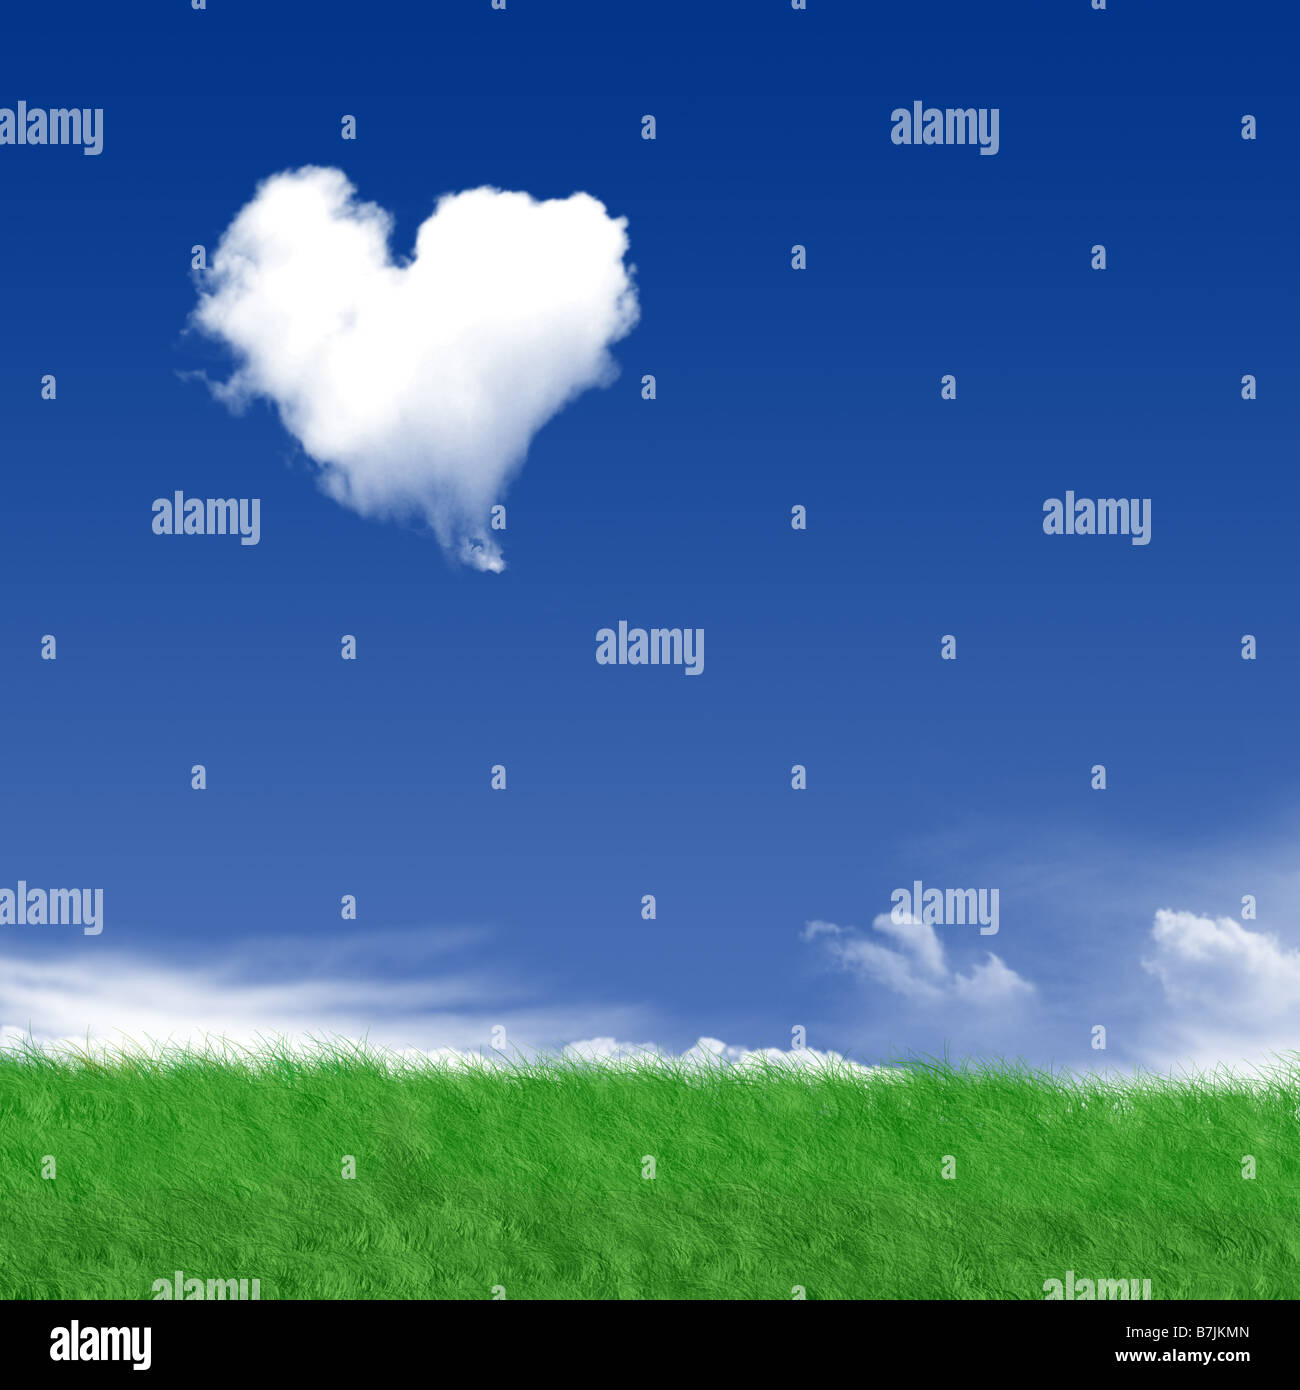 a cloud seen as a heart Stock Photo